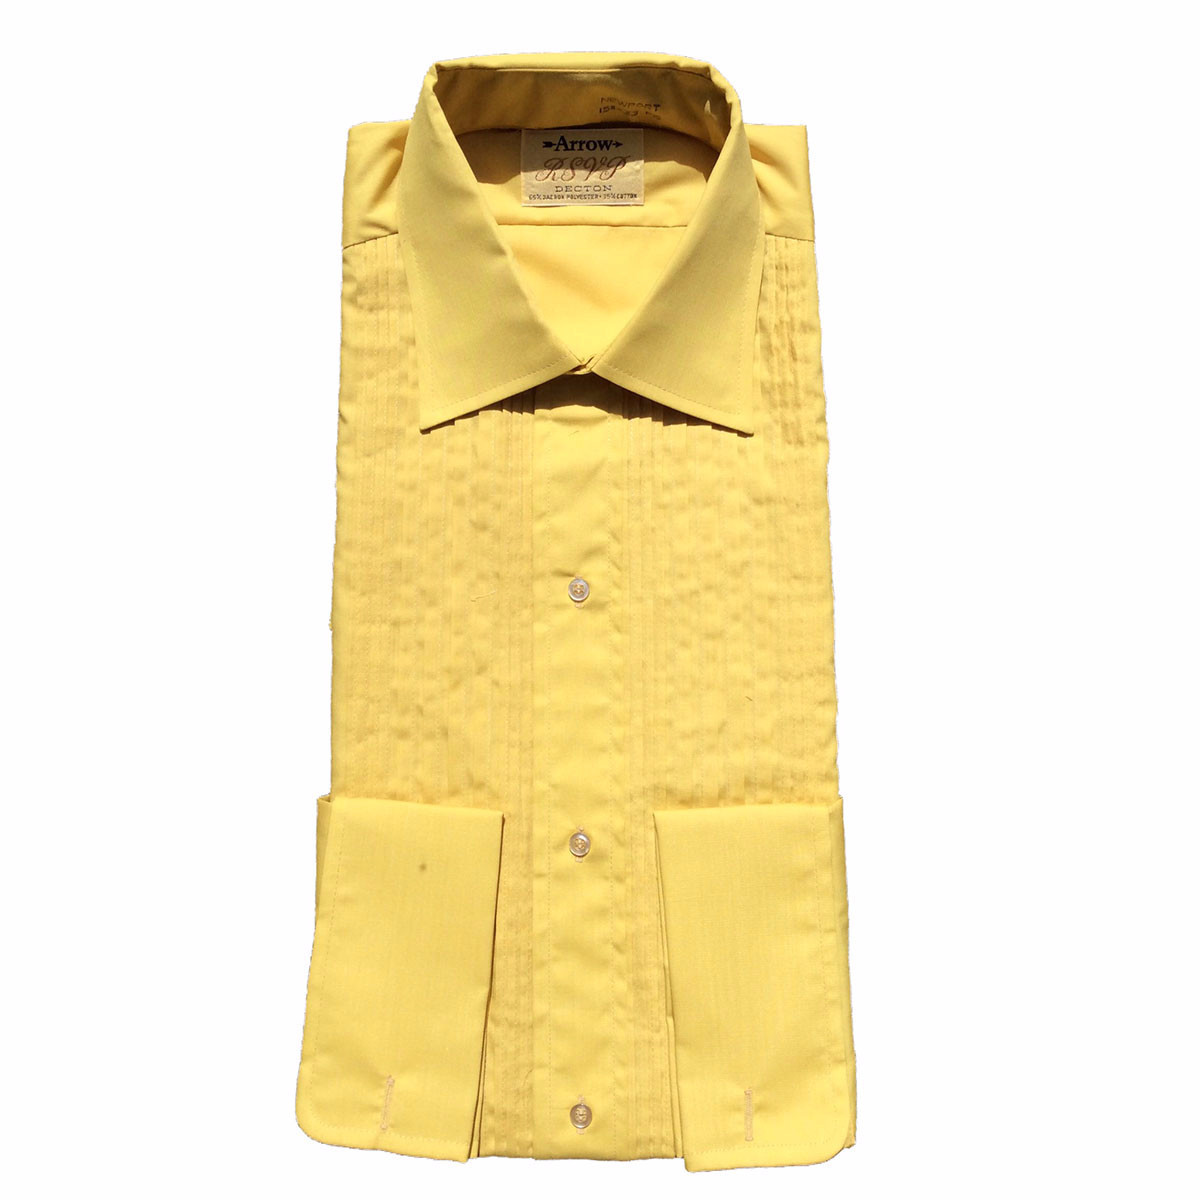 Men's Vintage Tuxedo Shirt in Mustard or Azure by Arrow RSVP